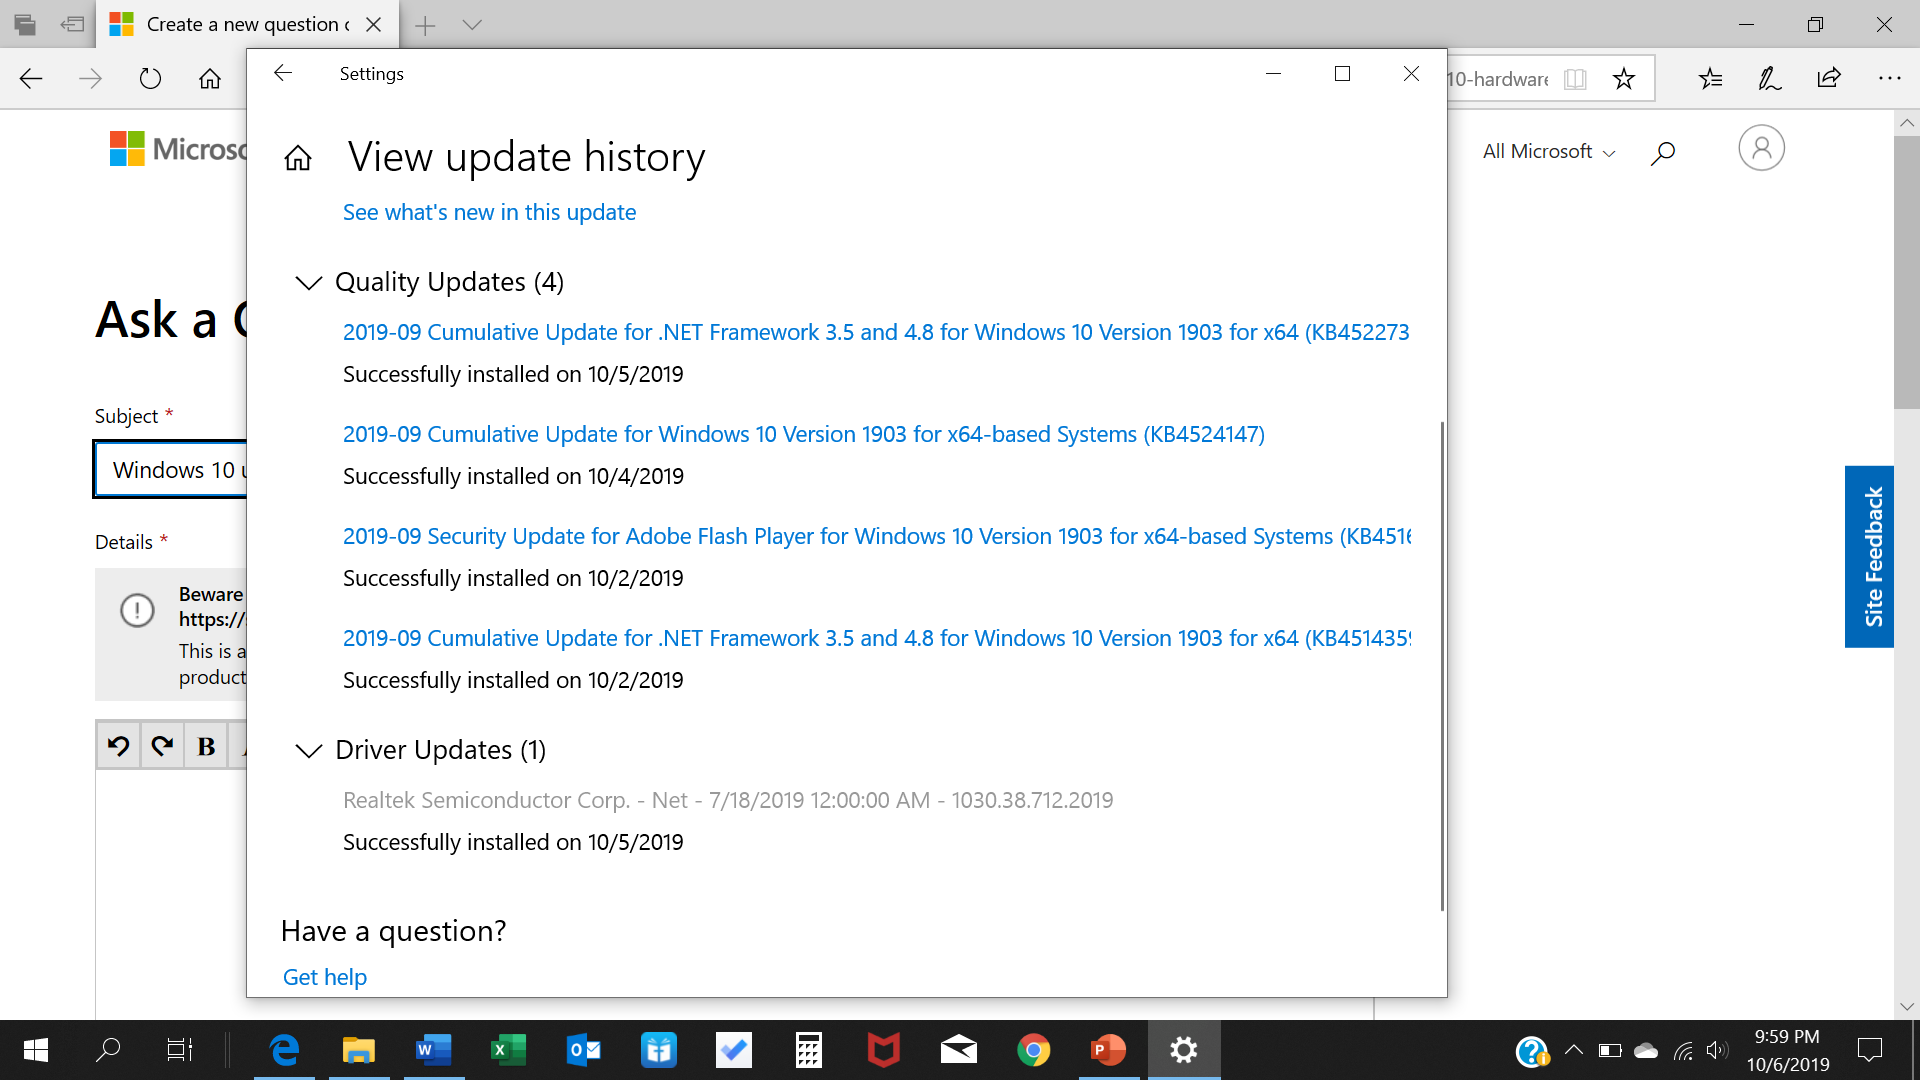 Windows 10 update causes printer problems de034923-88fb-48ba-a346-850225906765?upload=true.png